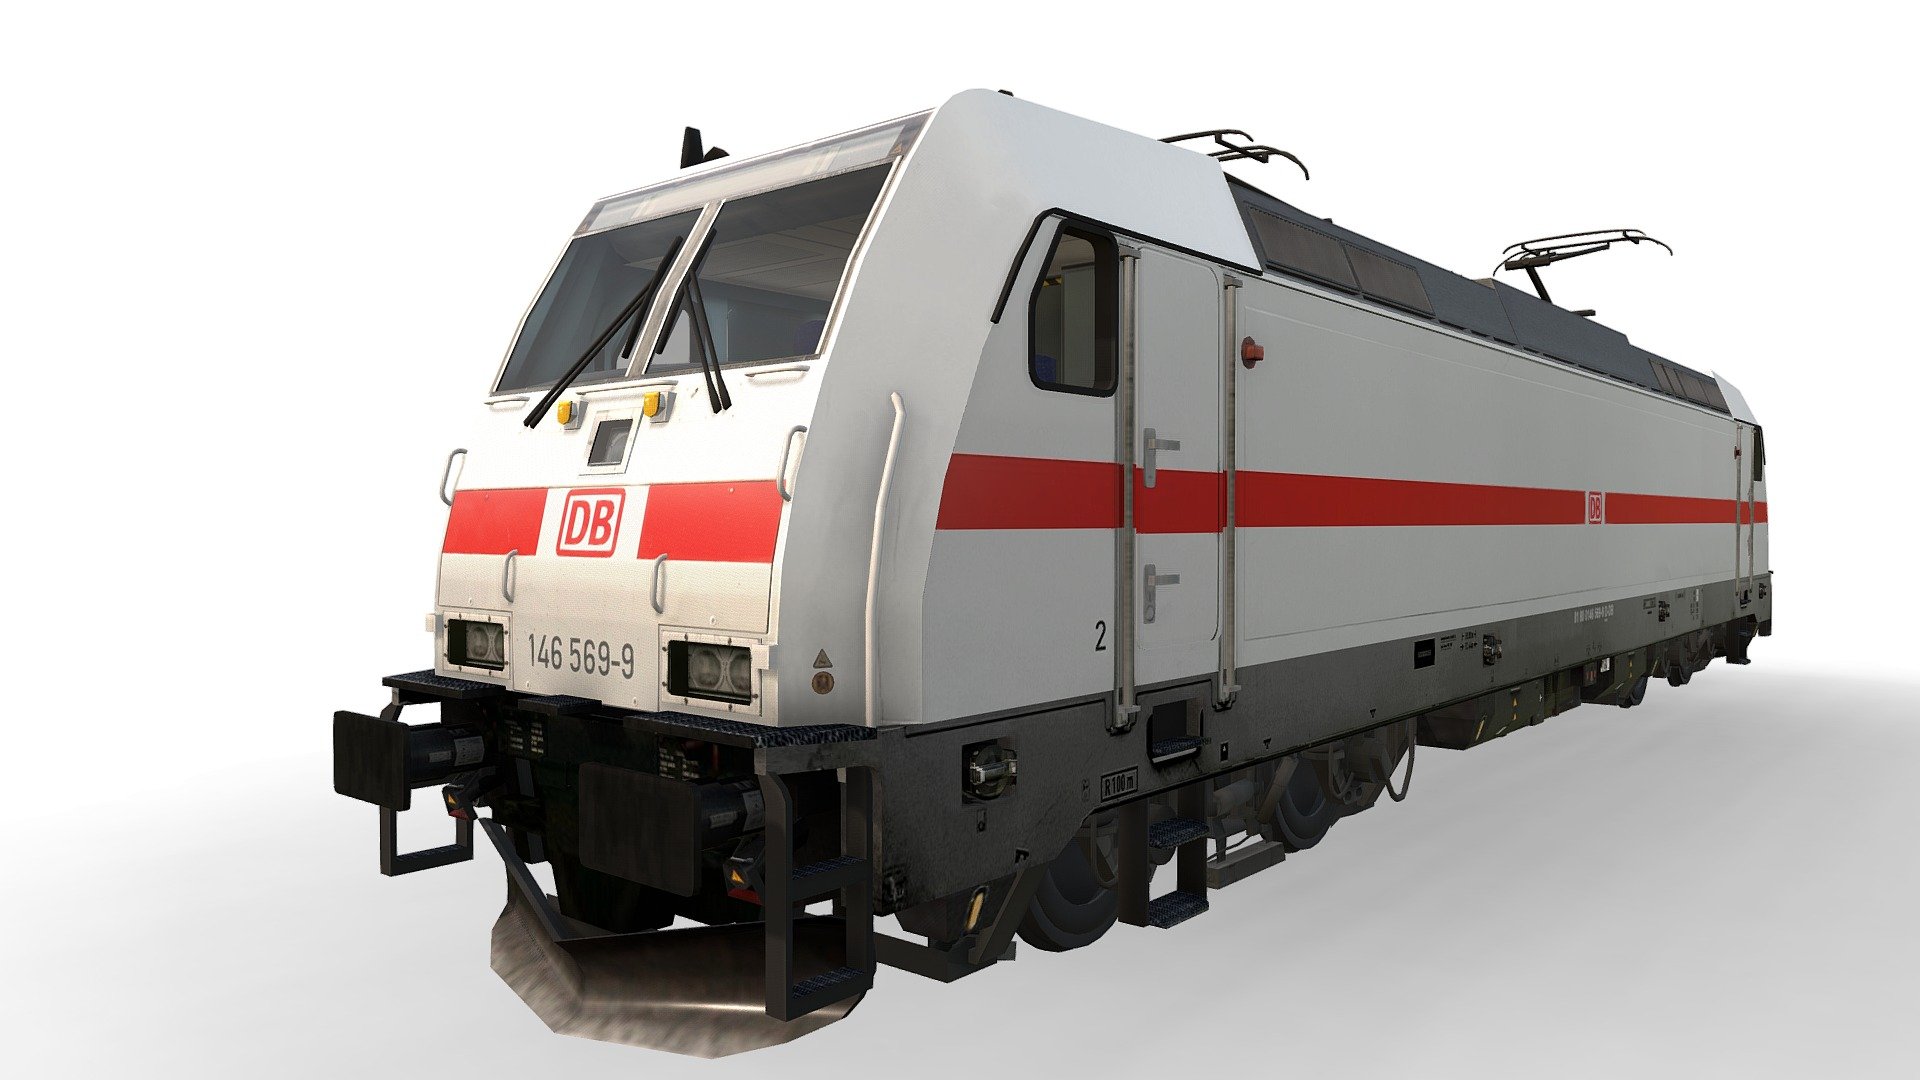 Locomotive Class 146 569-9 - DB Fernverkehr